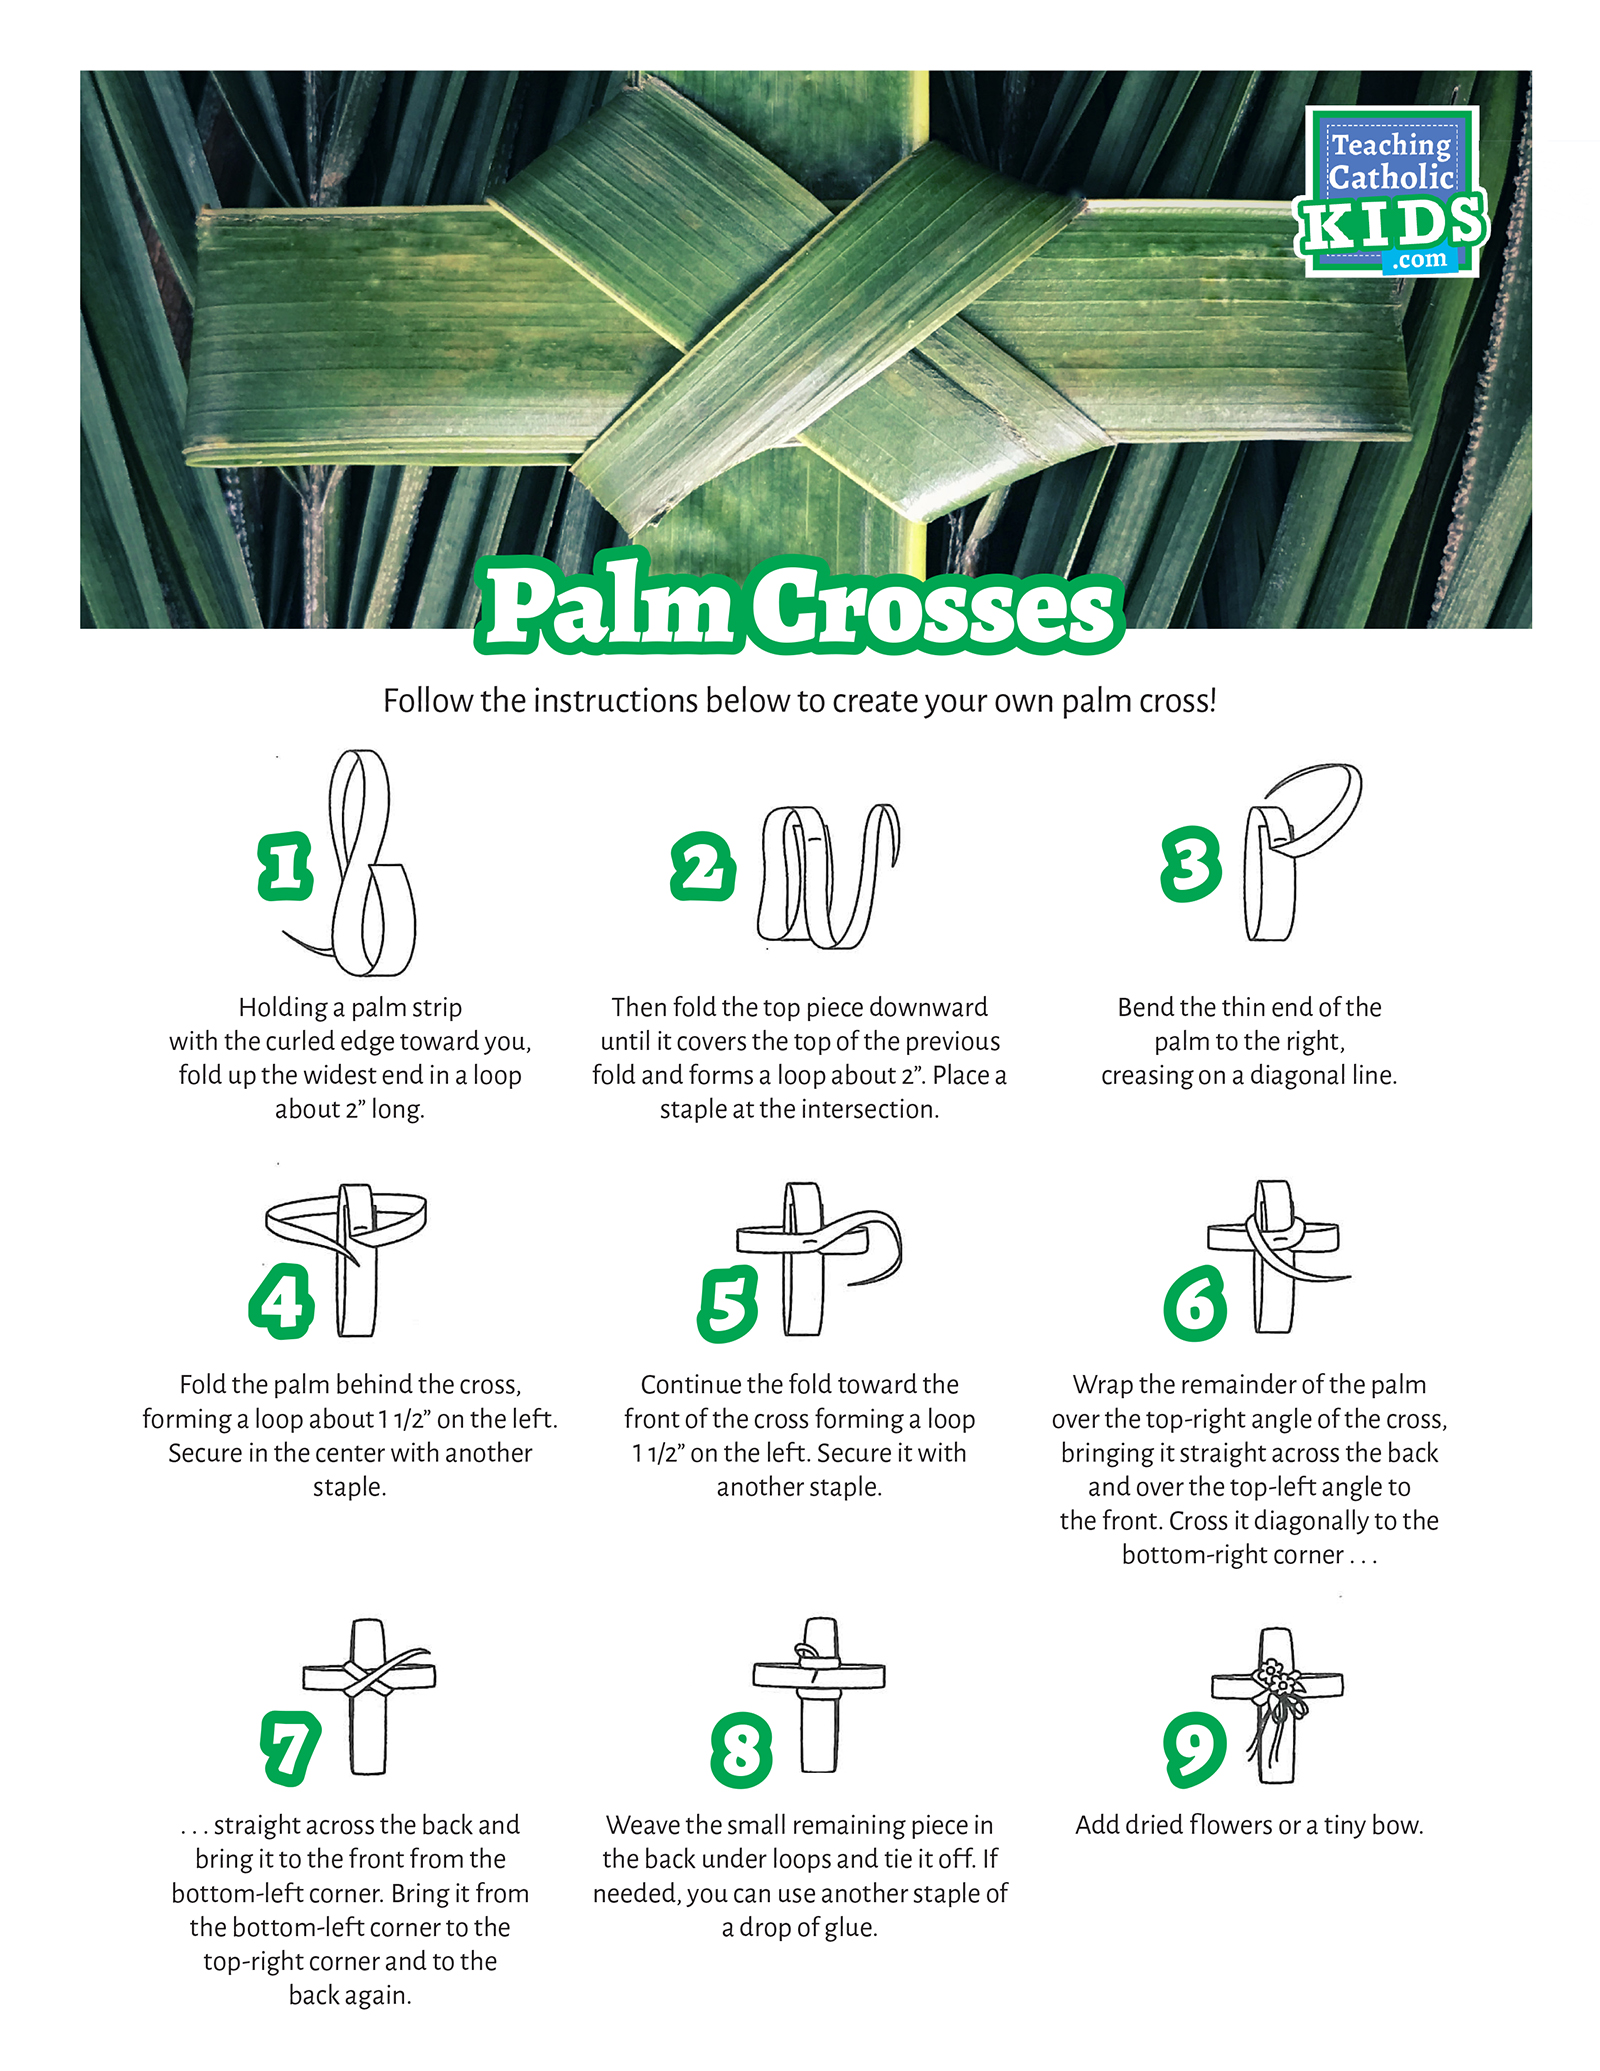 How to fold a palm cross